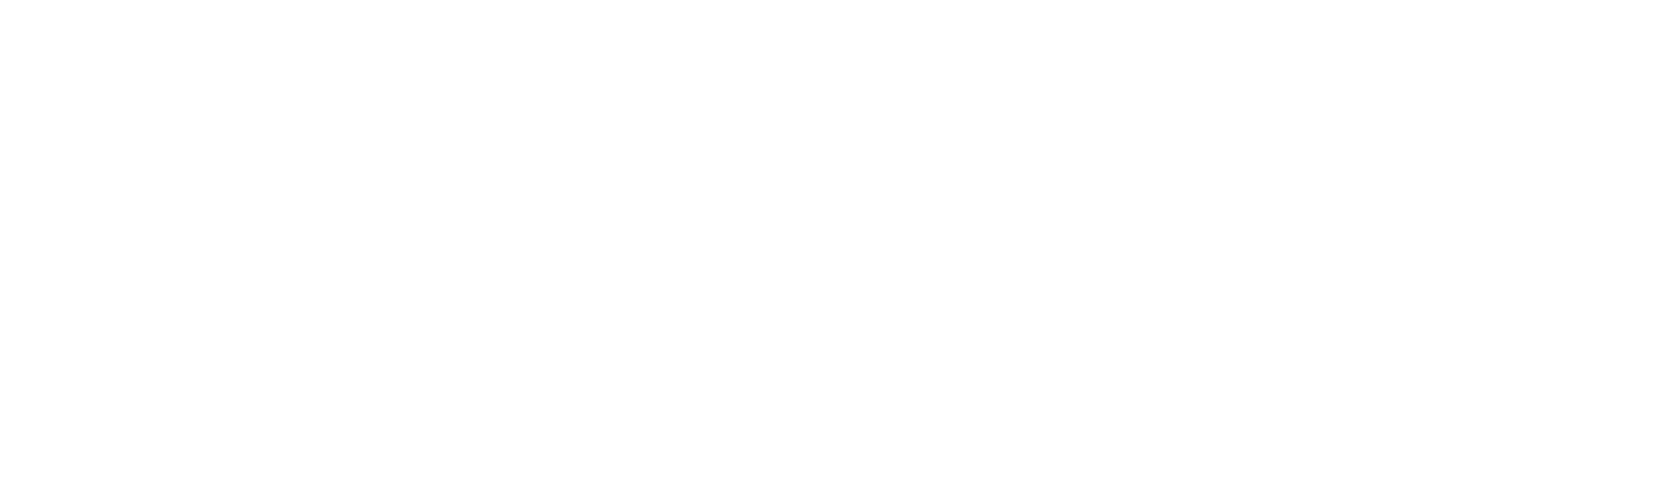 SMS Latinoamerica